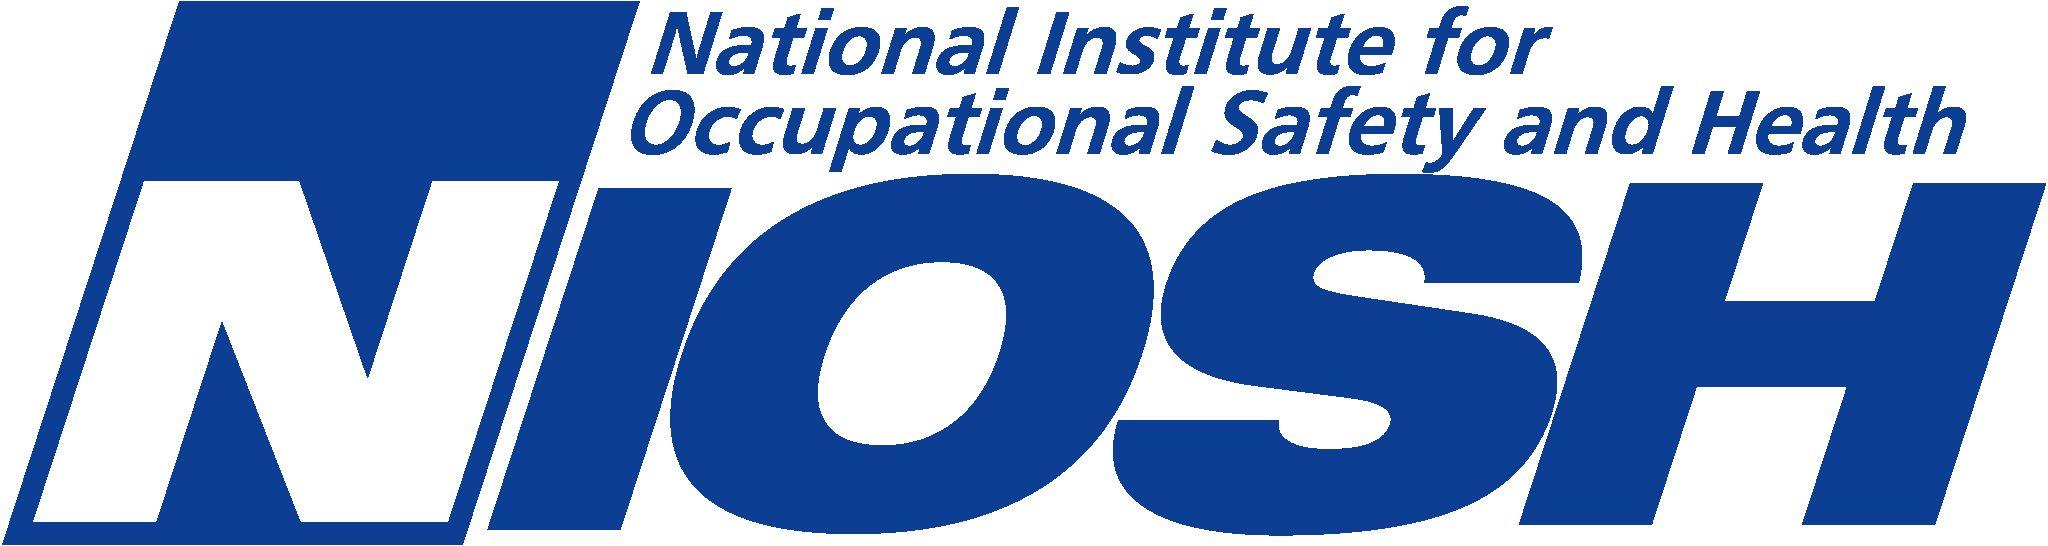 NIOSH Logo - NIOSH-logo